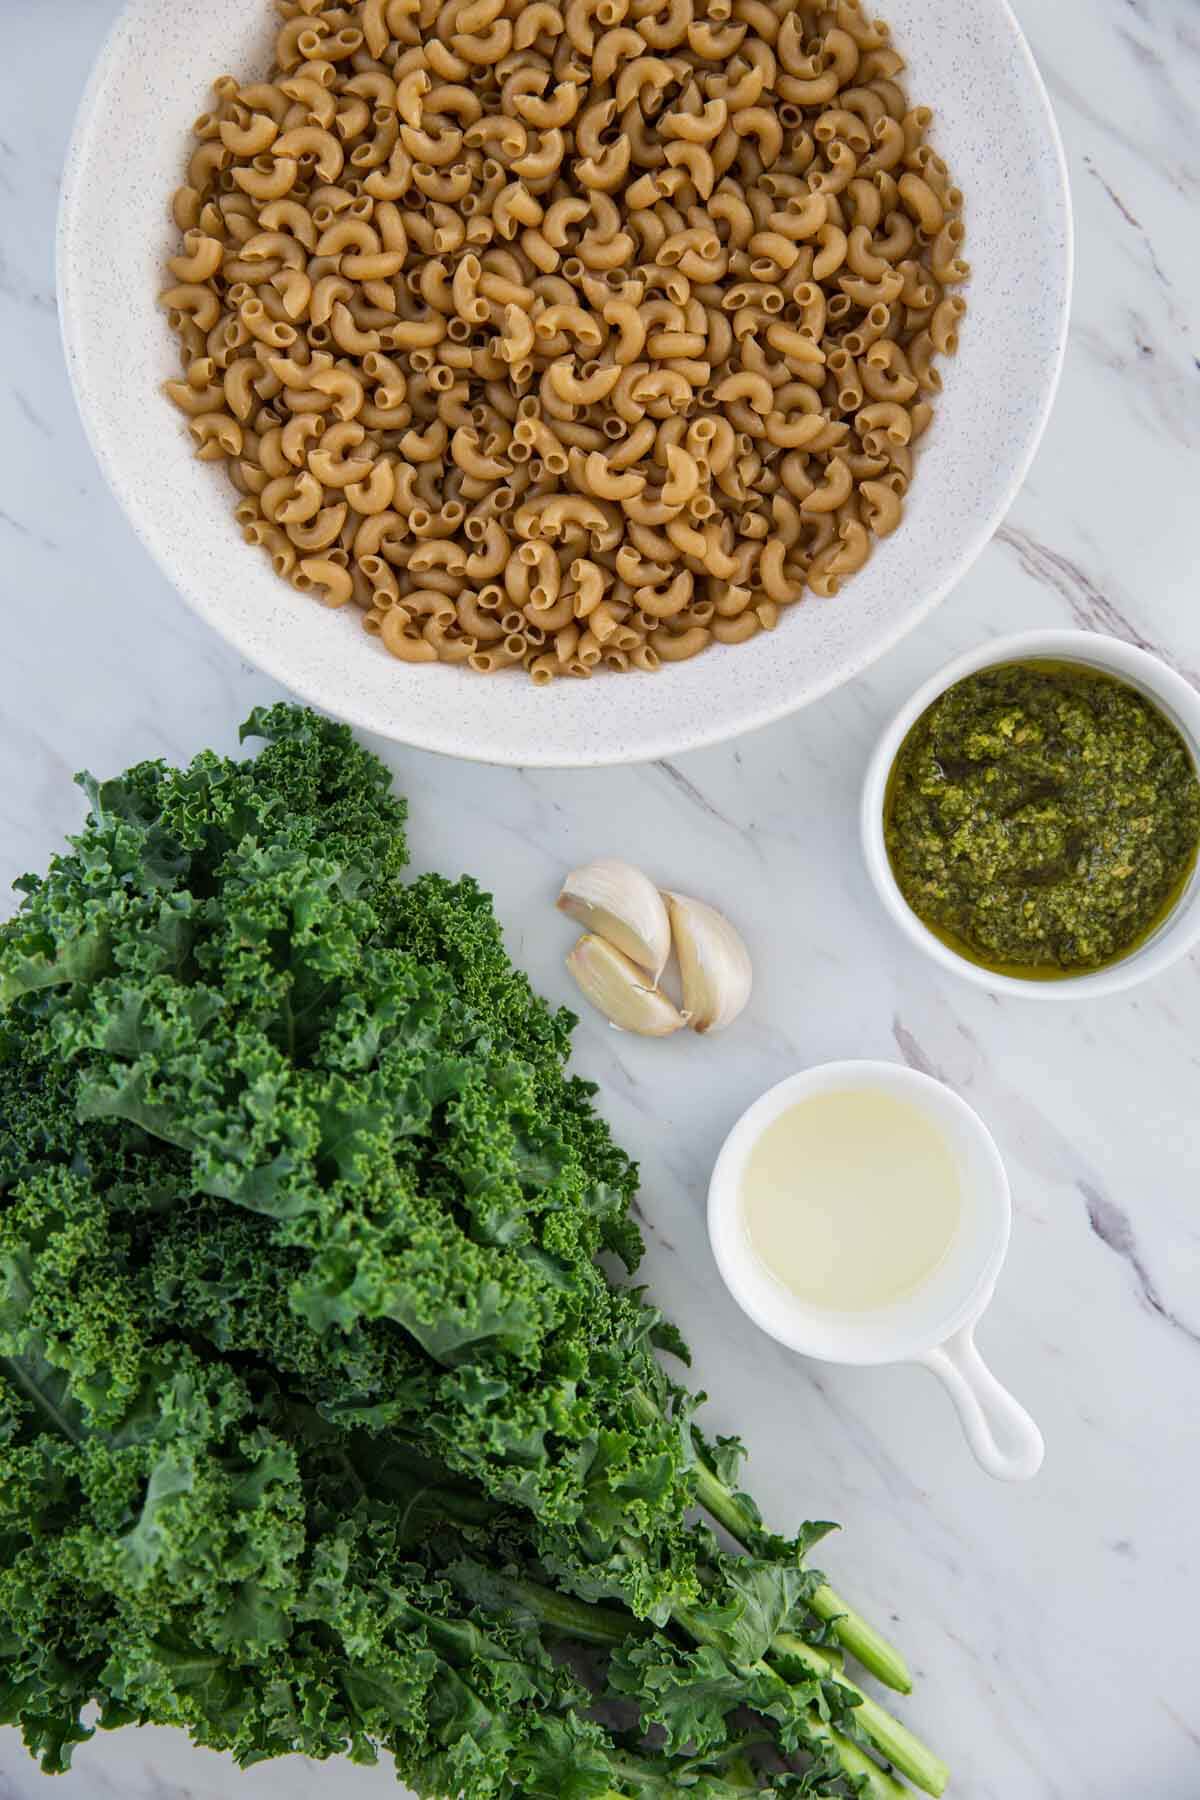 ingredients like raw pasta, basil pesto, garlic cloves, oil and bunch of fresh kale gathered for making healthy garlic kale pasta.